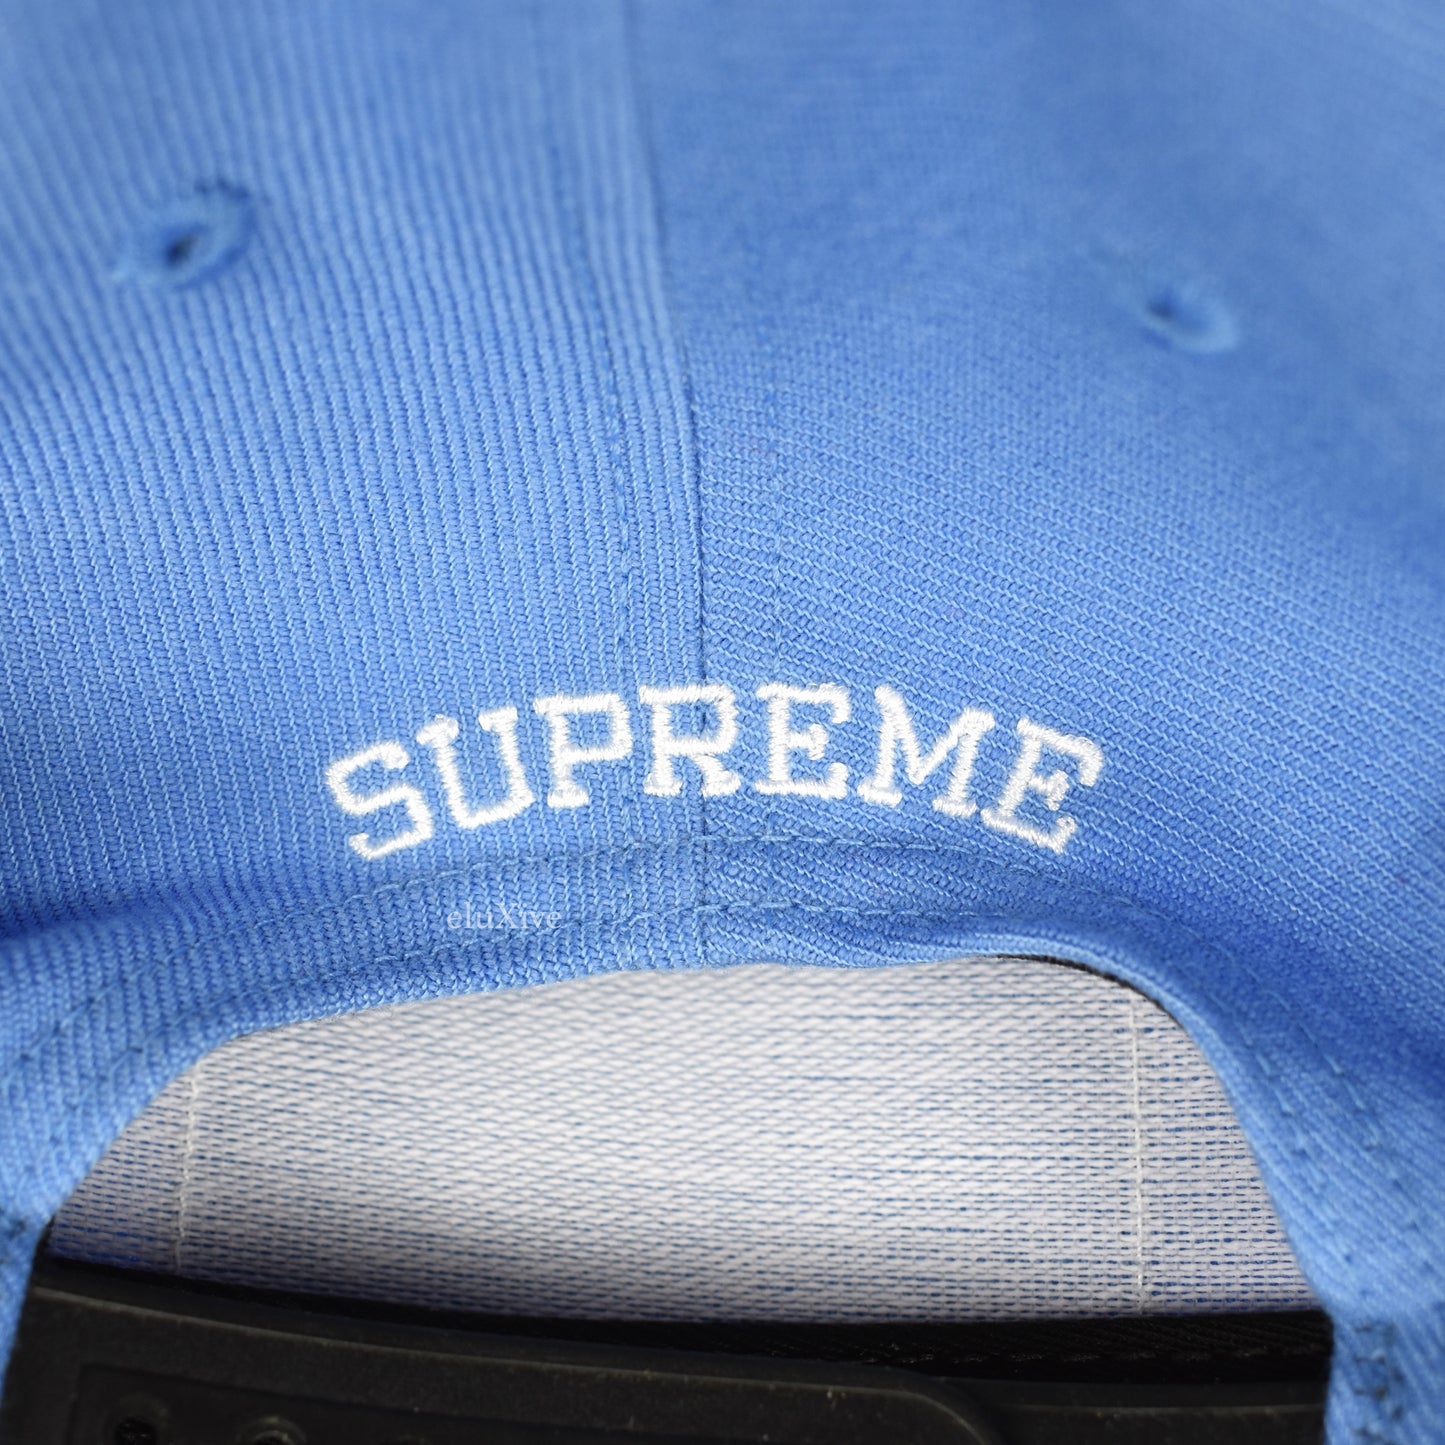 Supreme - Ol Dirty Bastard Logo Patch Hat (Blue)